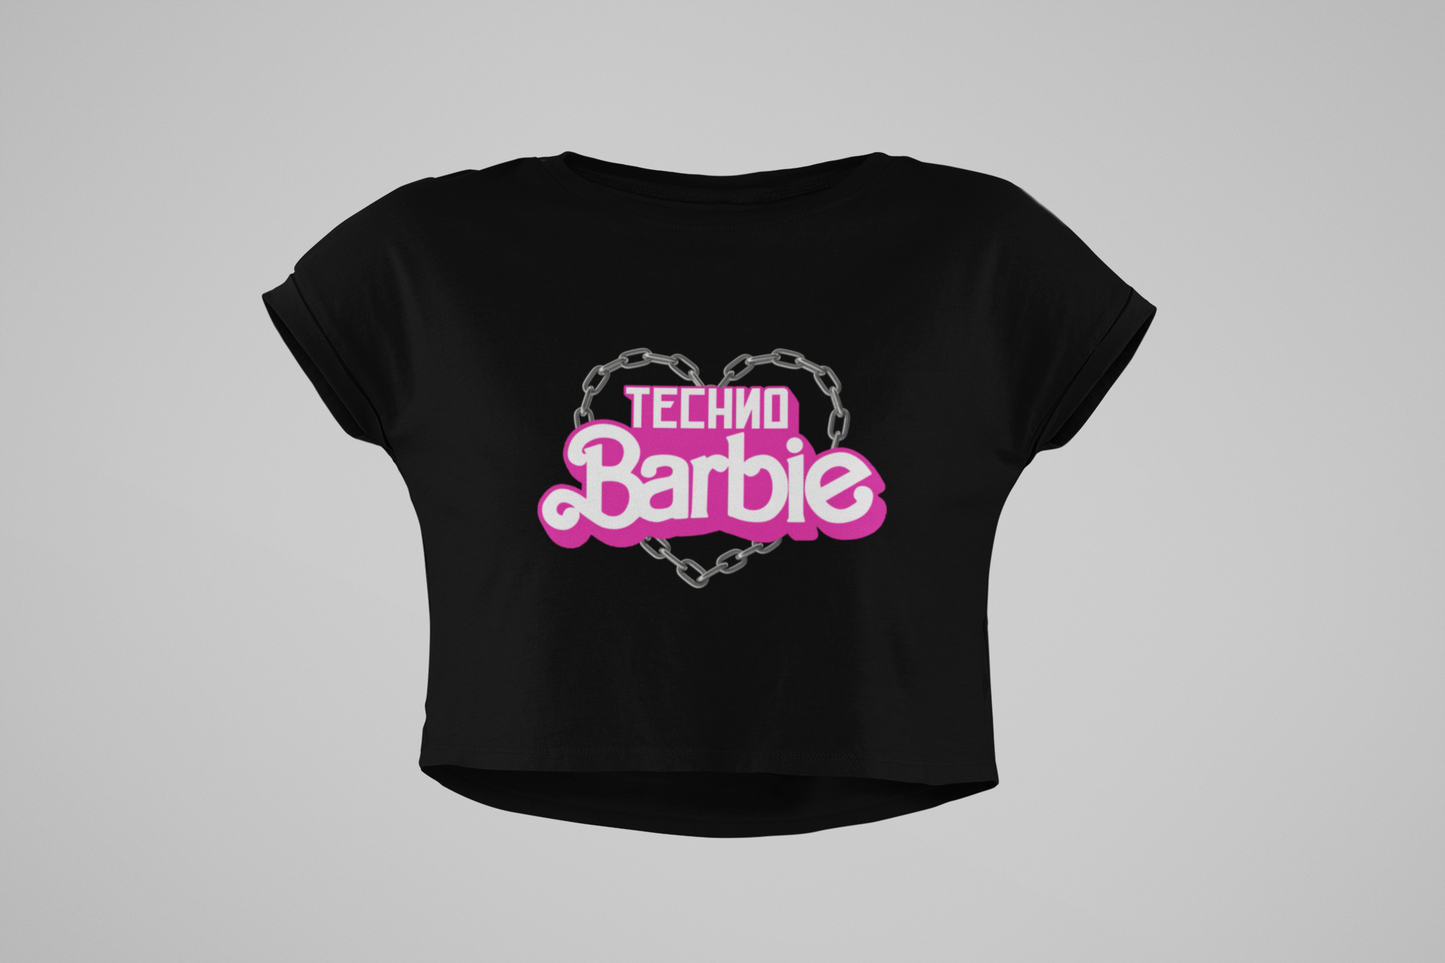 Techno Barbie - Black Crop Top